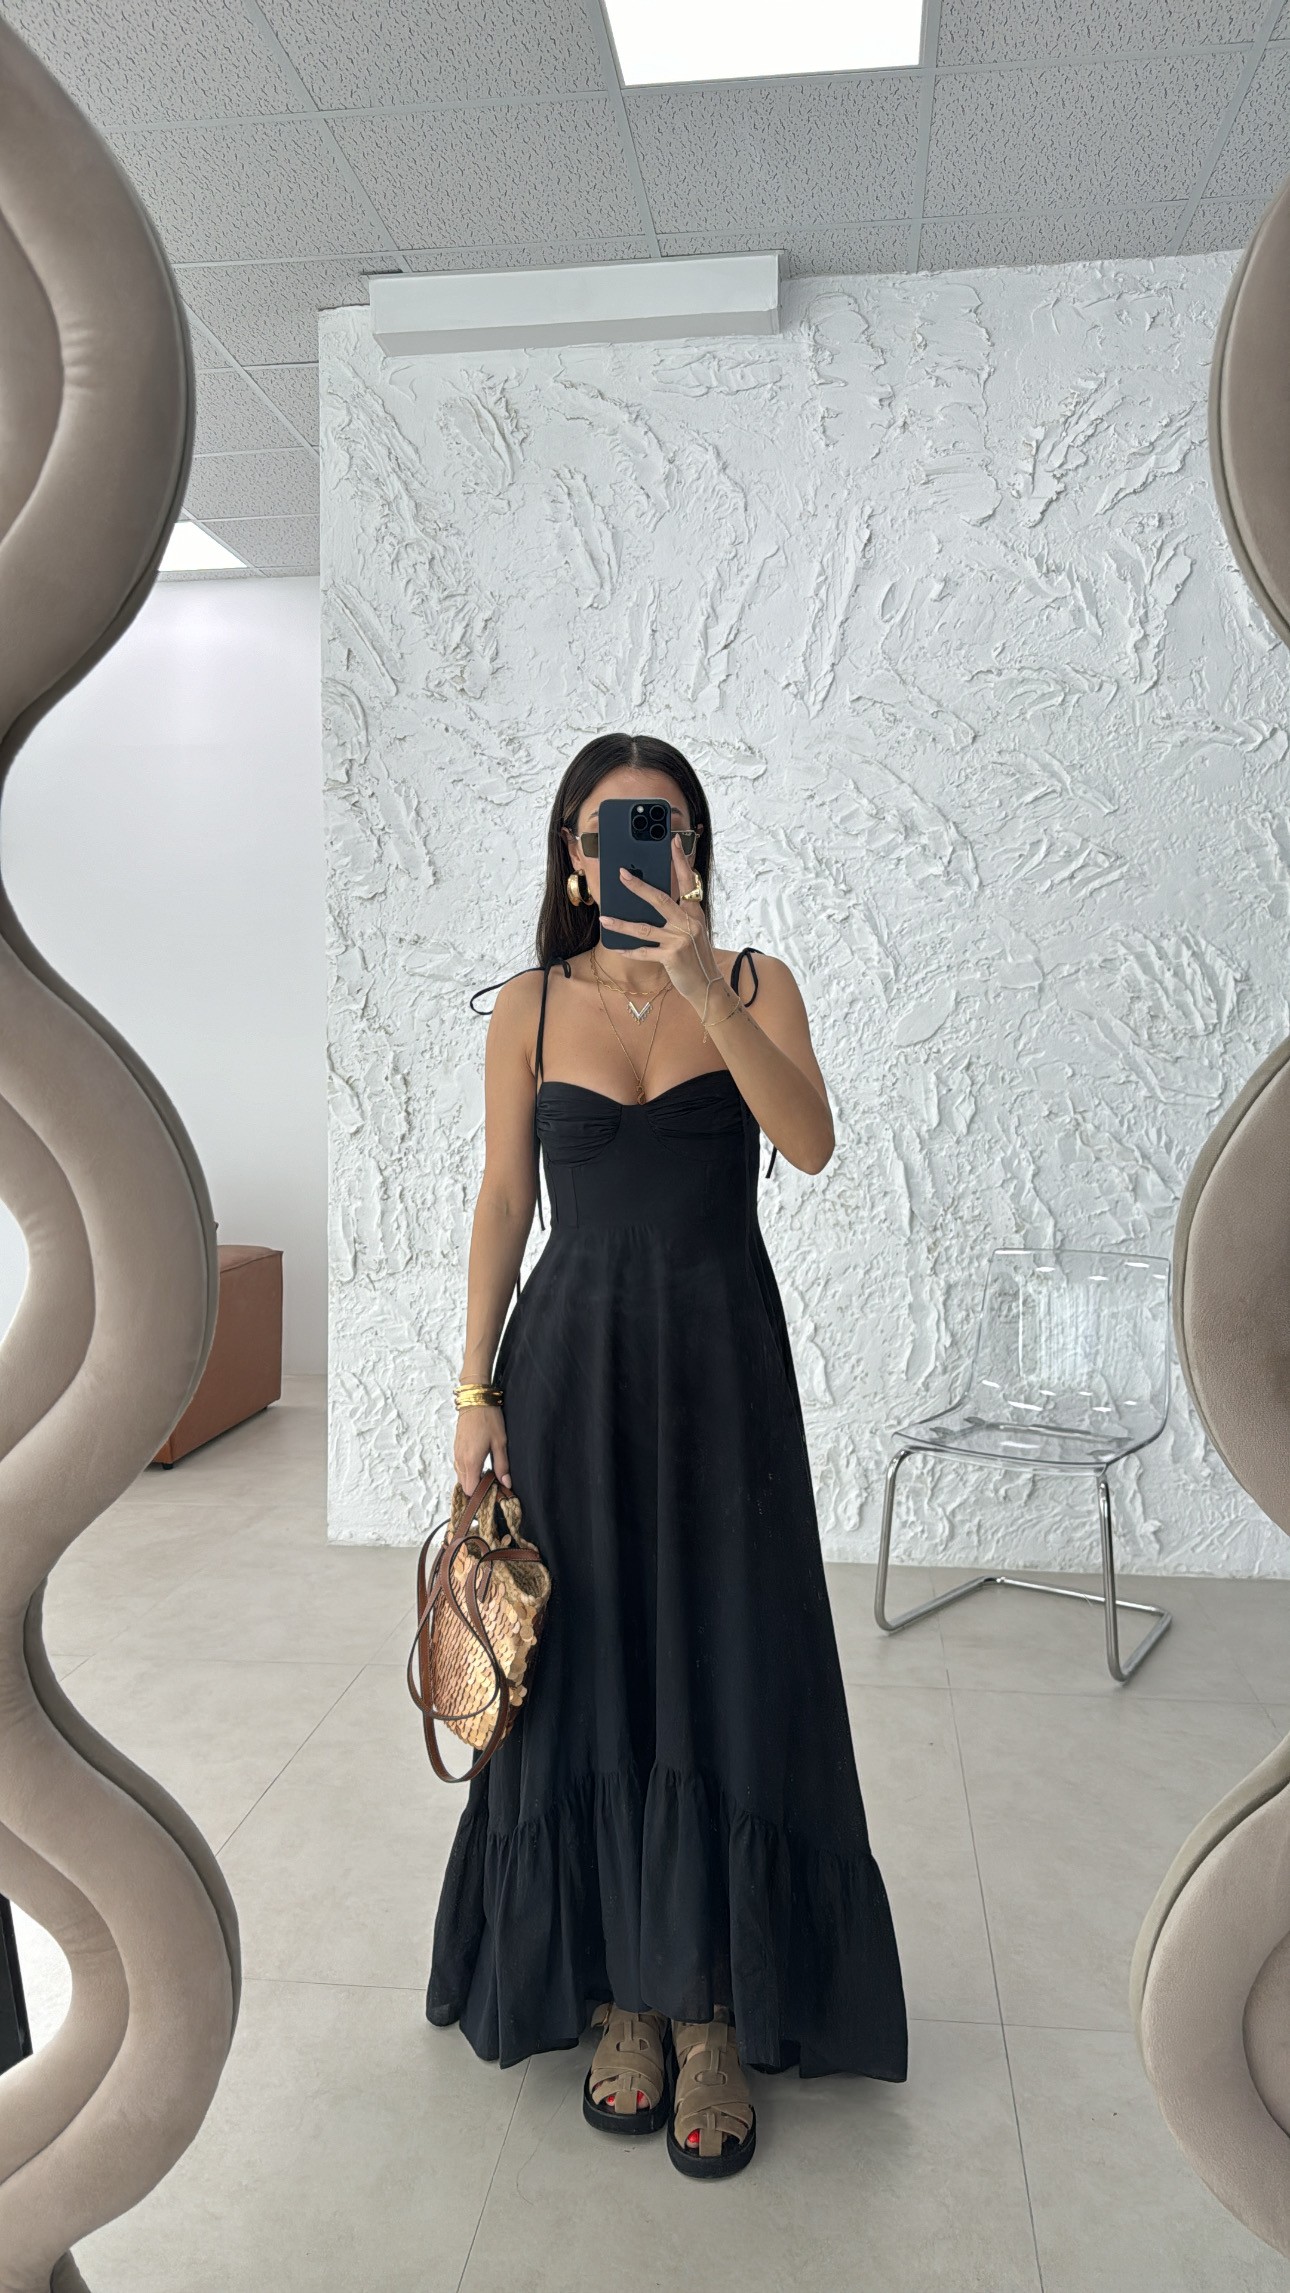 Zr model siyah fırfırlı poplin elbise